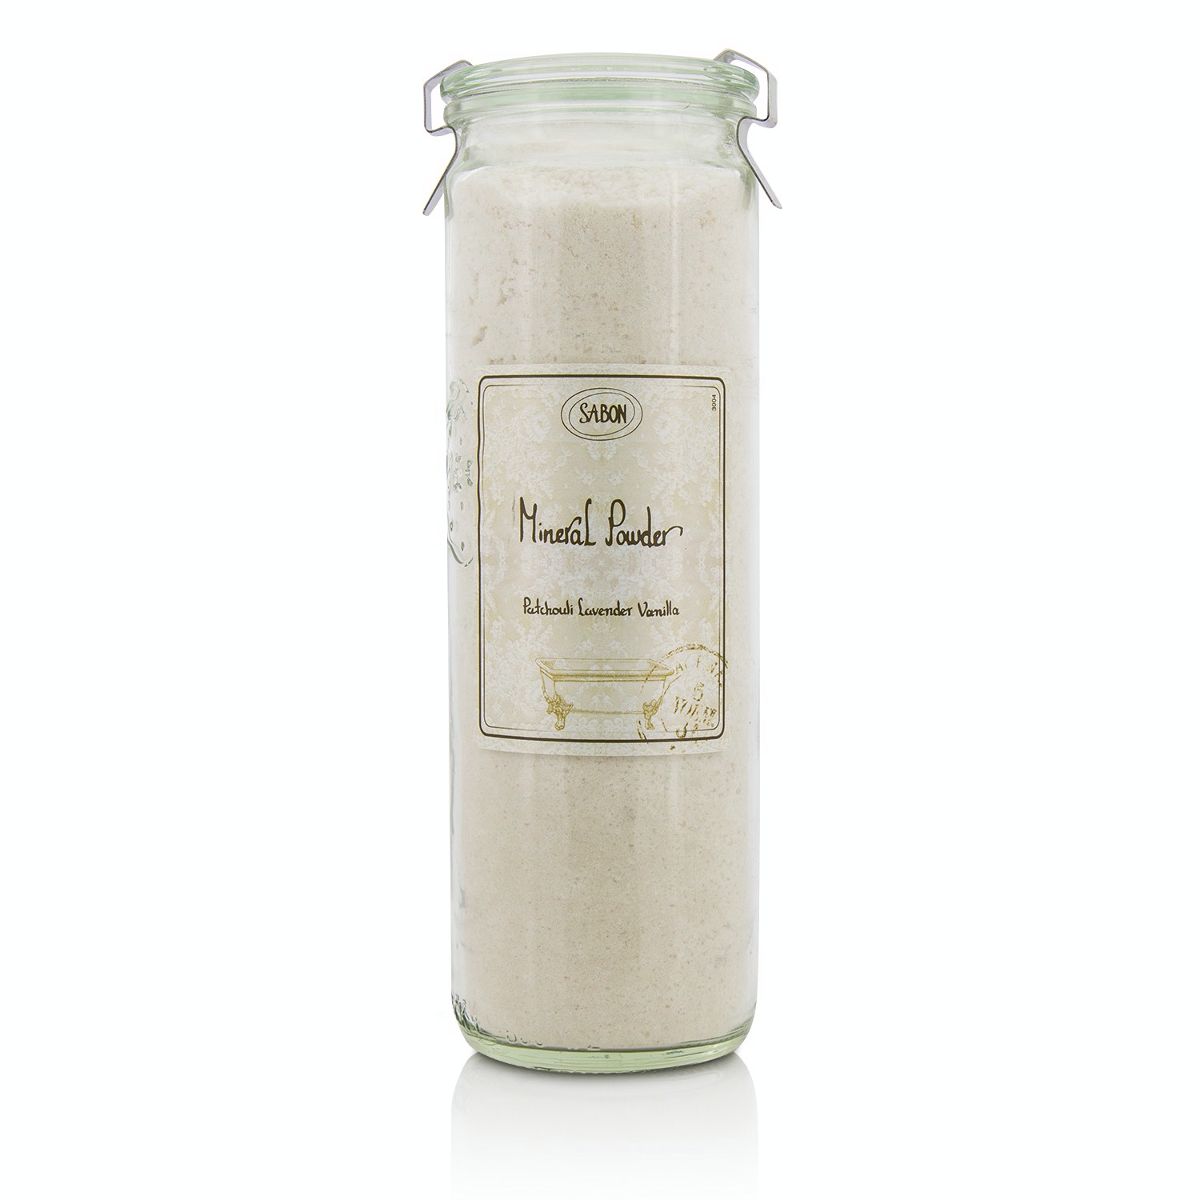 Mineral Powder - Patchouli Lavender Vanilla Sabon Image